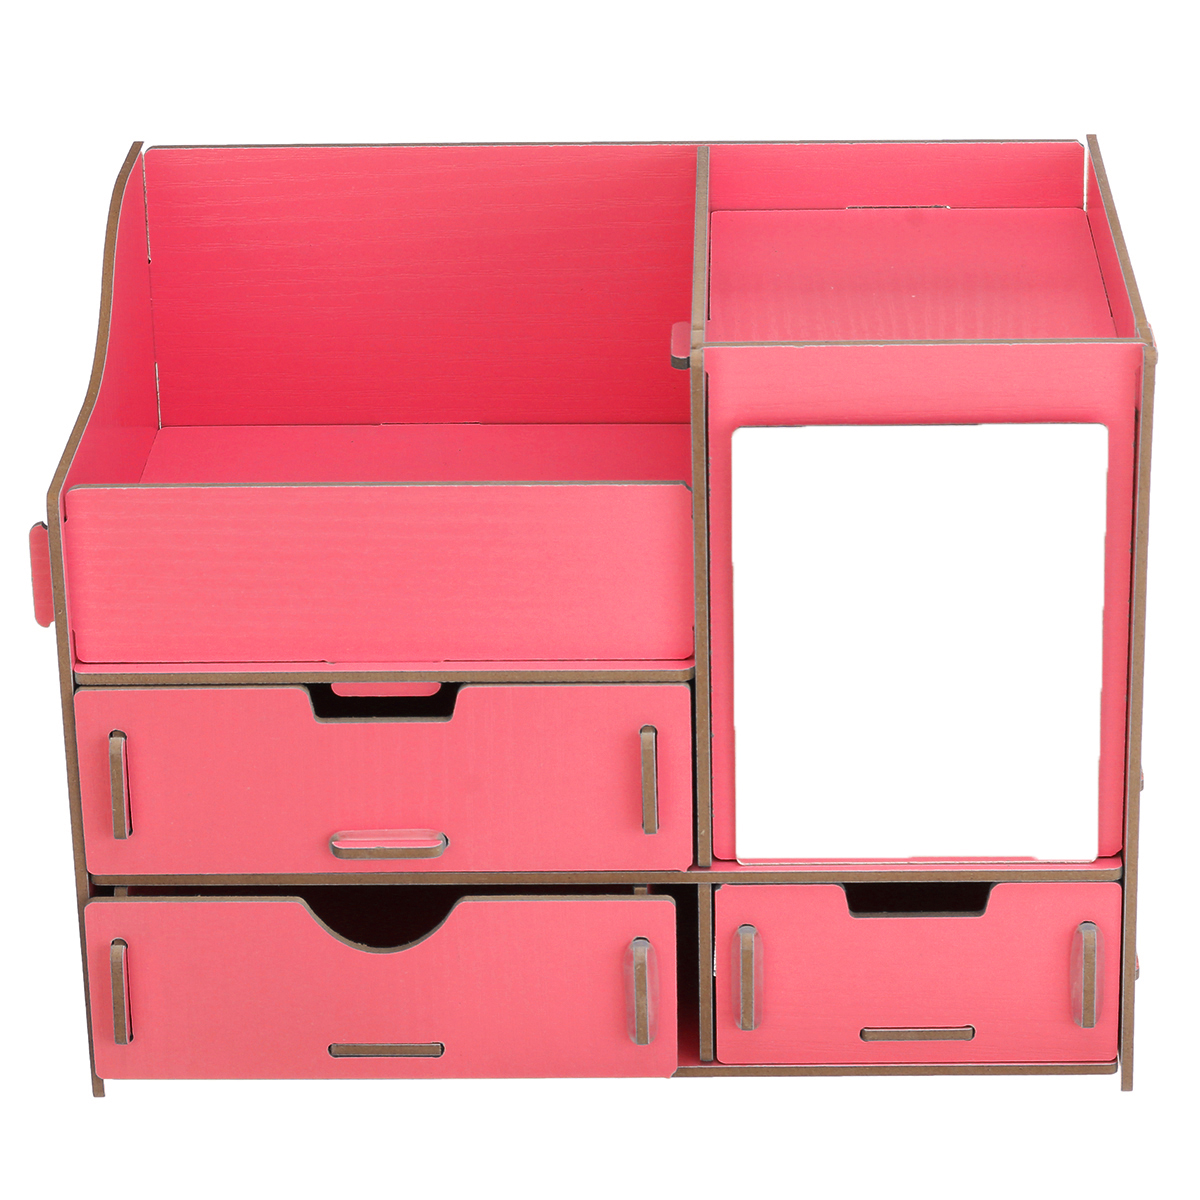 Makeup-Organizer-with-Mirror-Drawer-DIY-Desktop-Creative-Wooden-Storage-Box-Home-Dormitory-Desktop-S-1758574-12